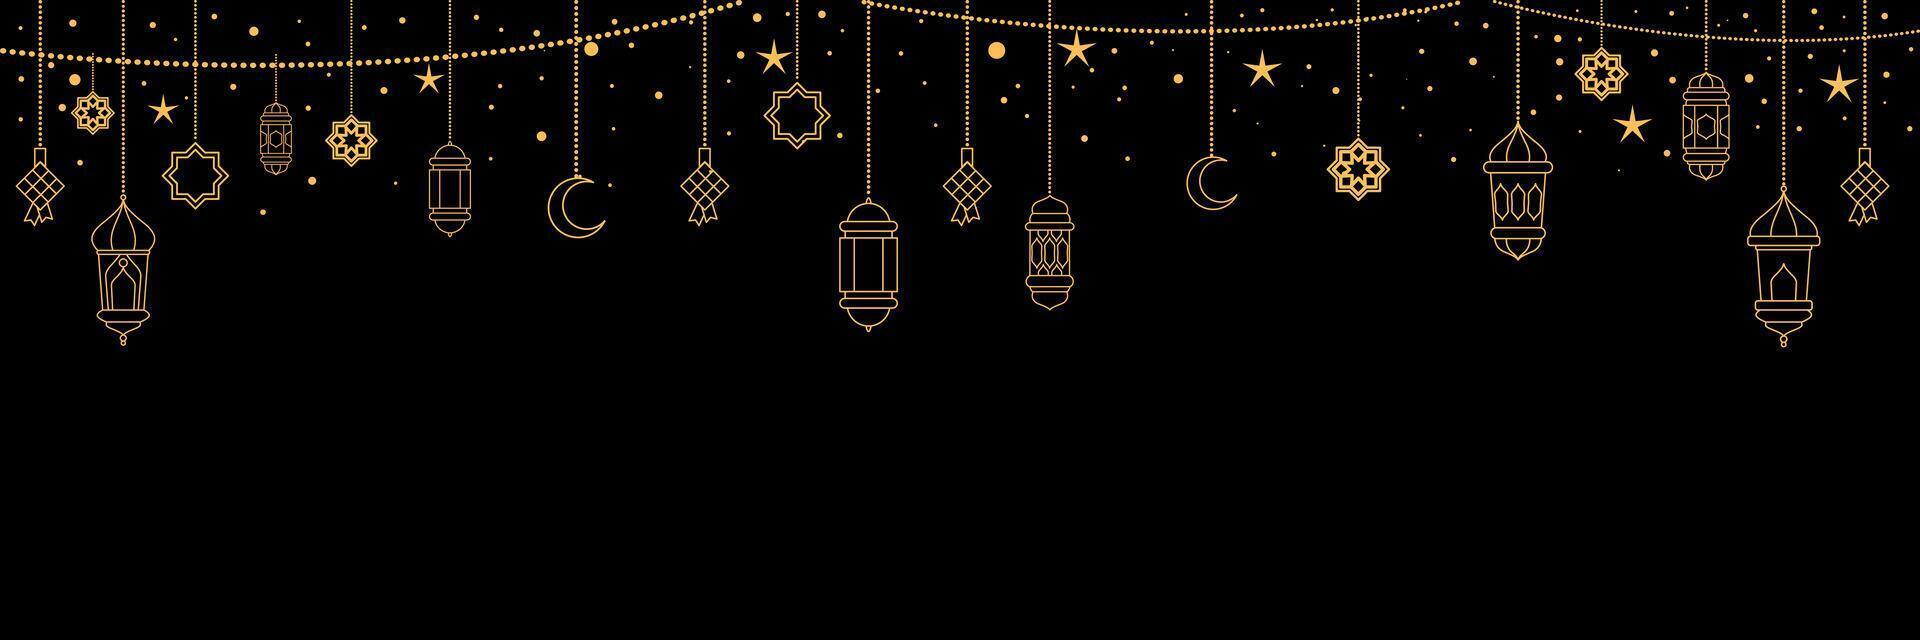 islamico sfondo con Arabo tradizionale Ramadan kareem orientale lanterne ghirlanda vettore